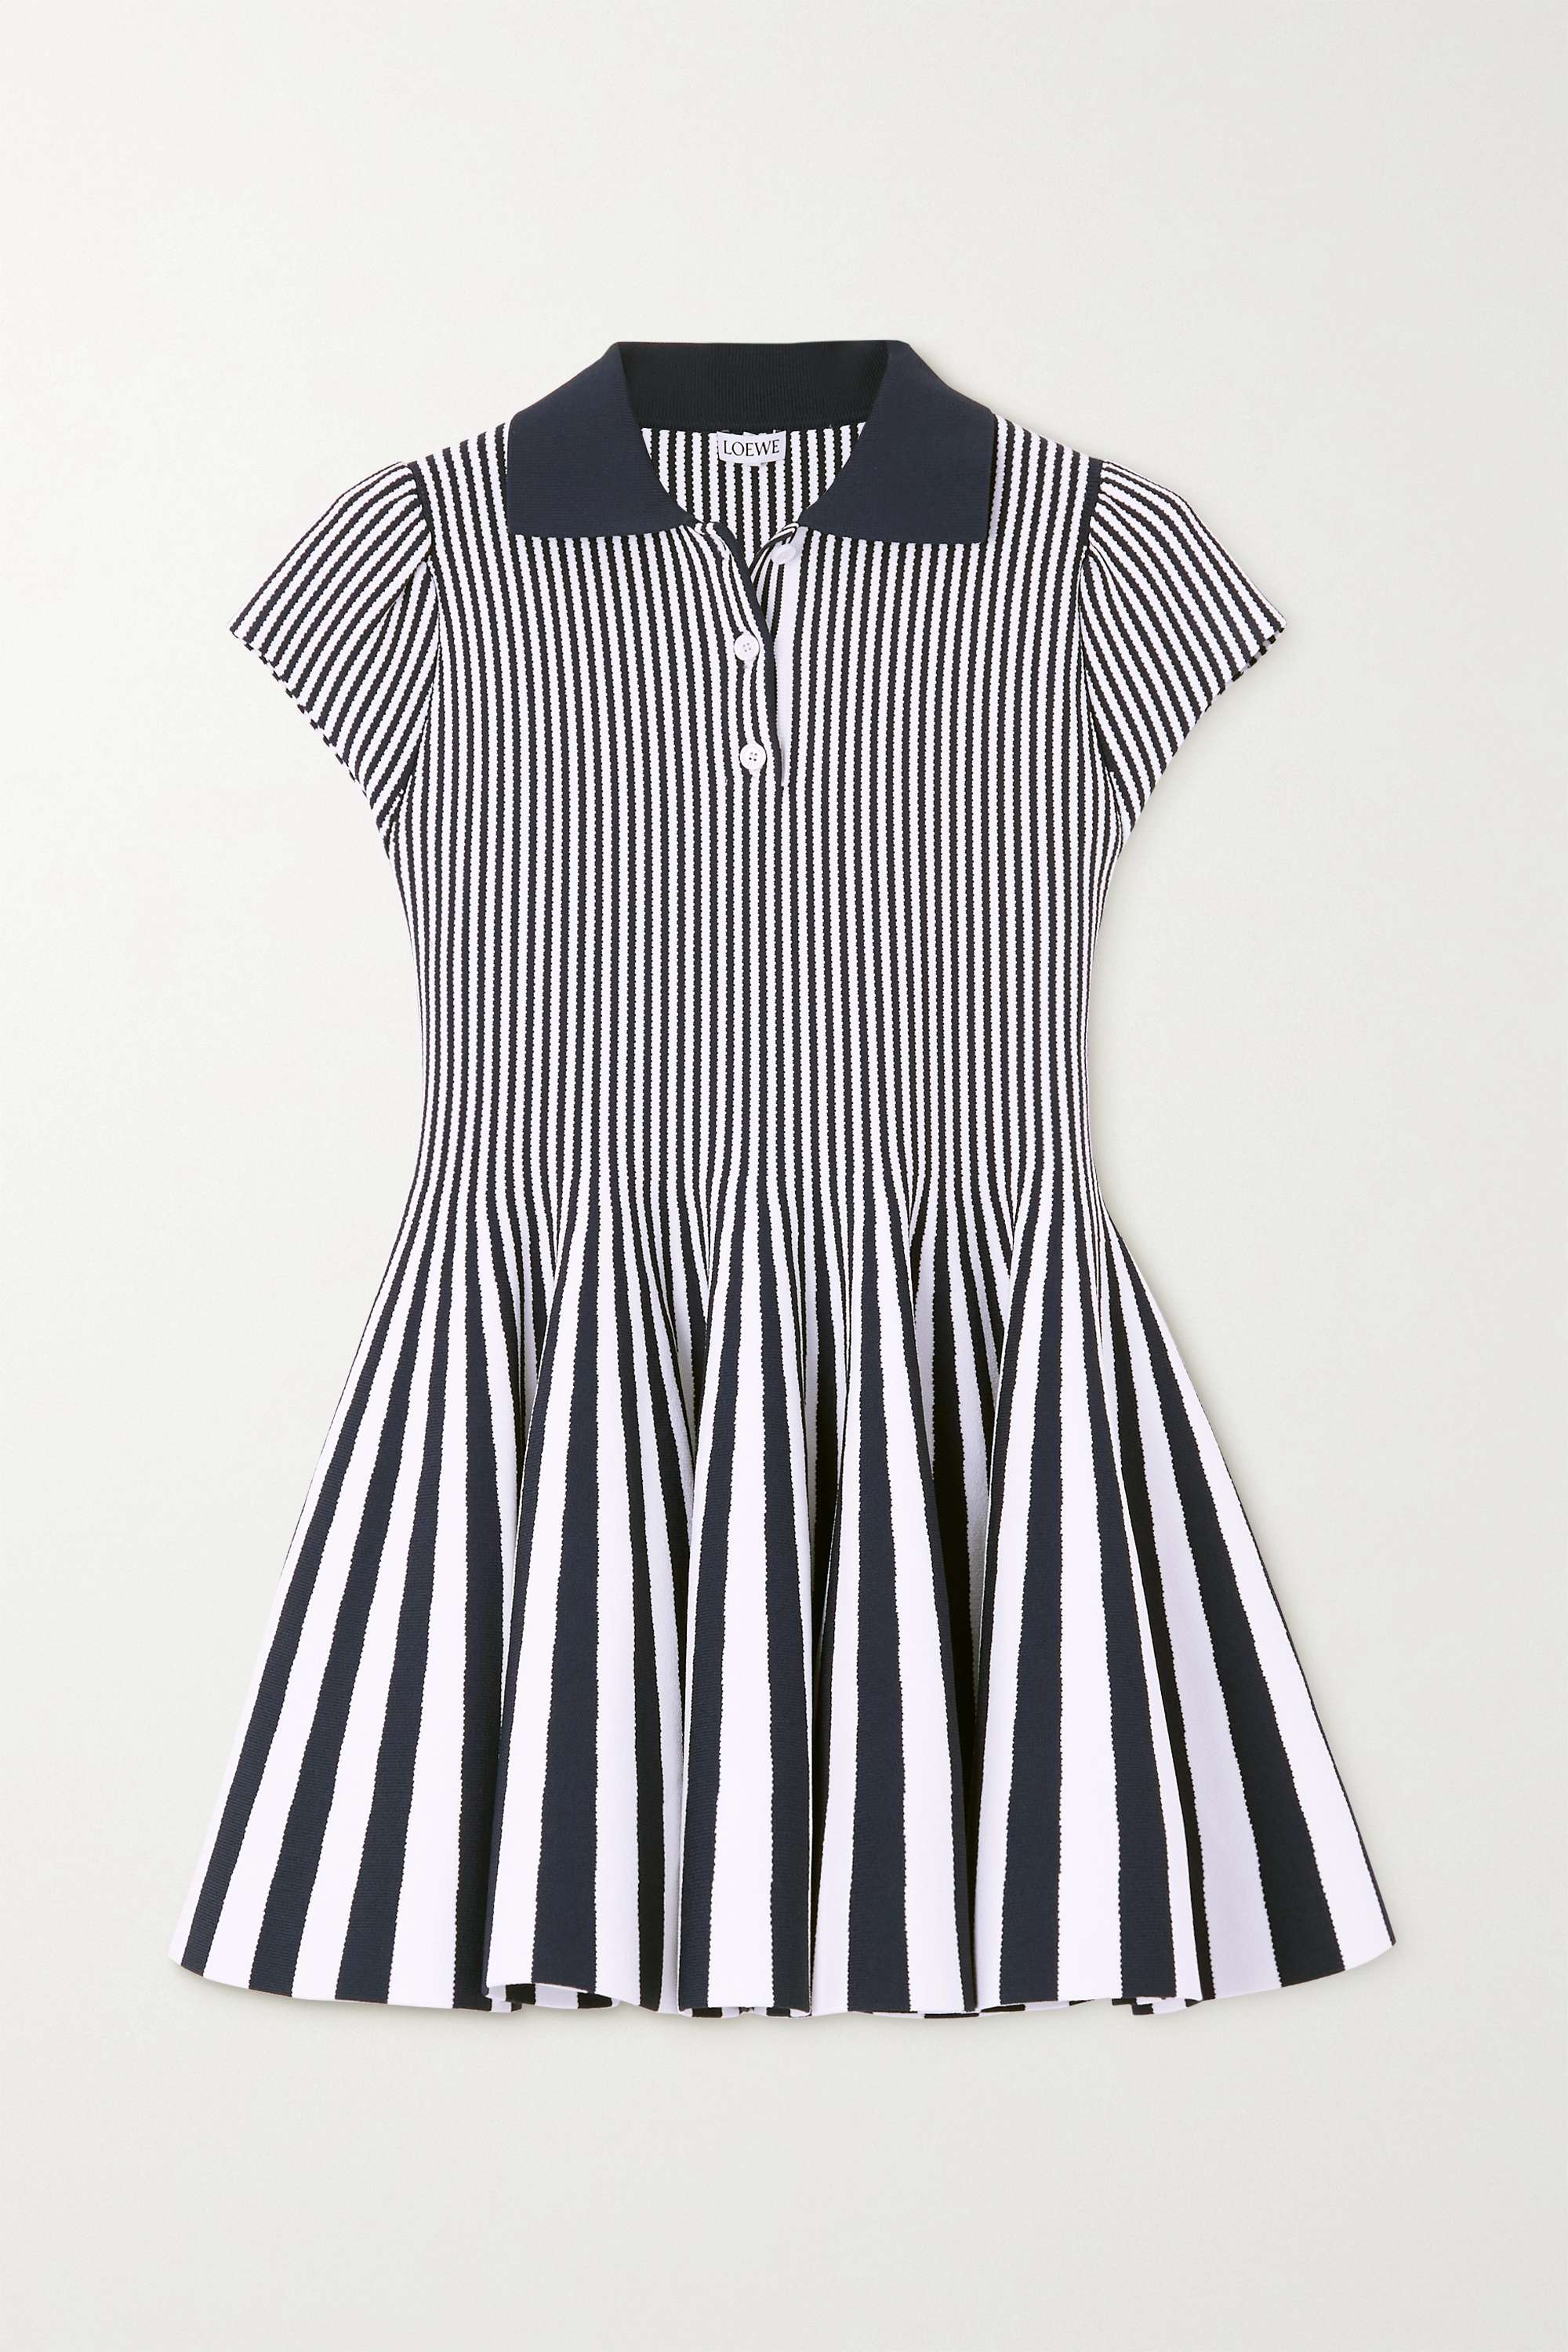 Loewe + Striped Crepe Mini Dress